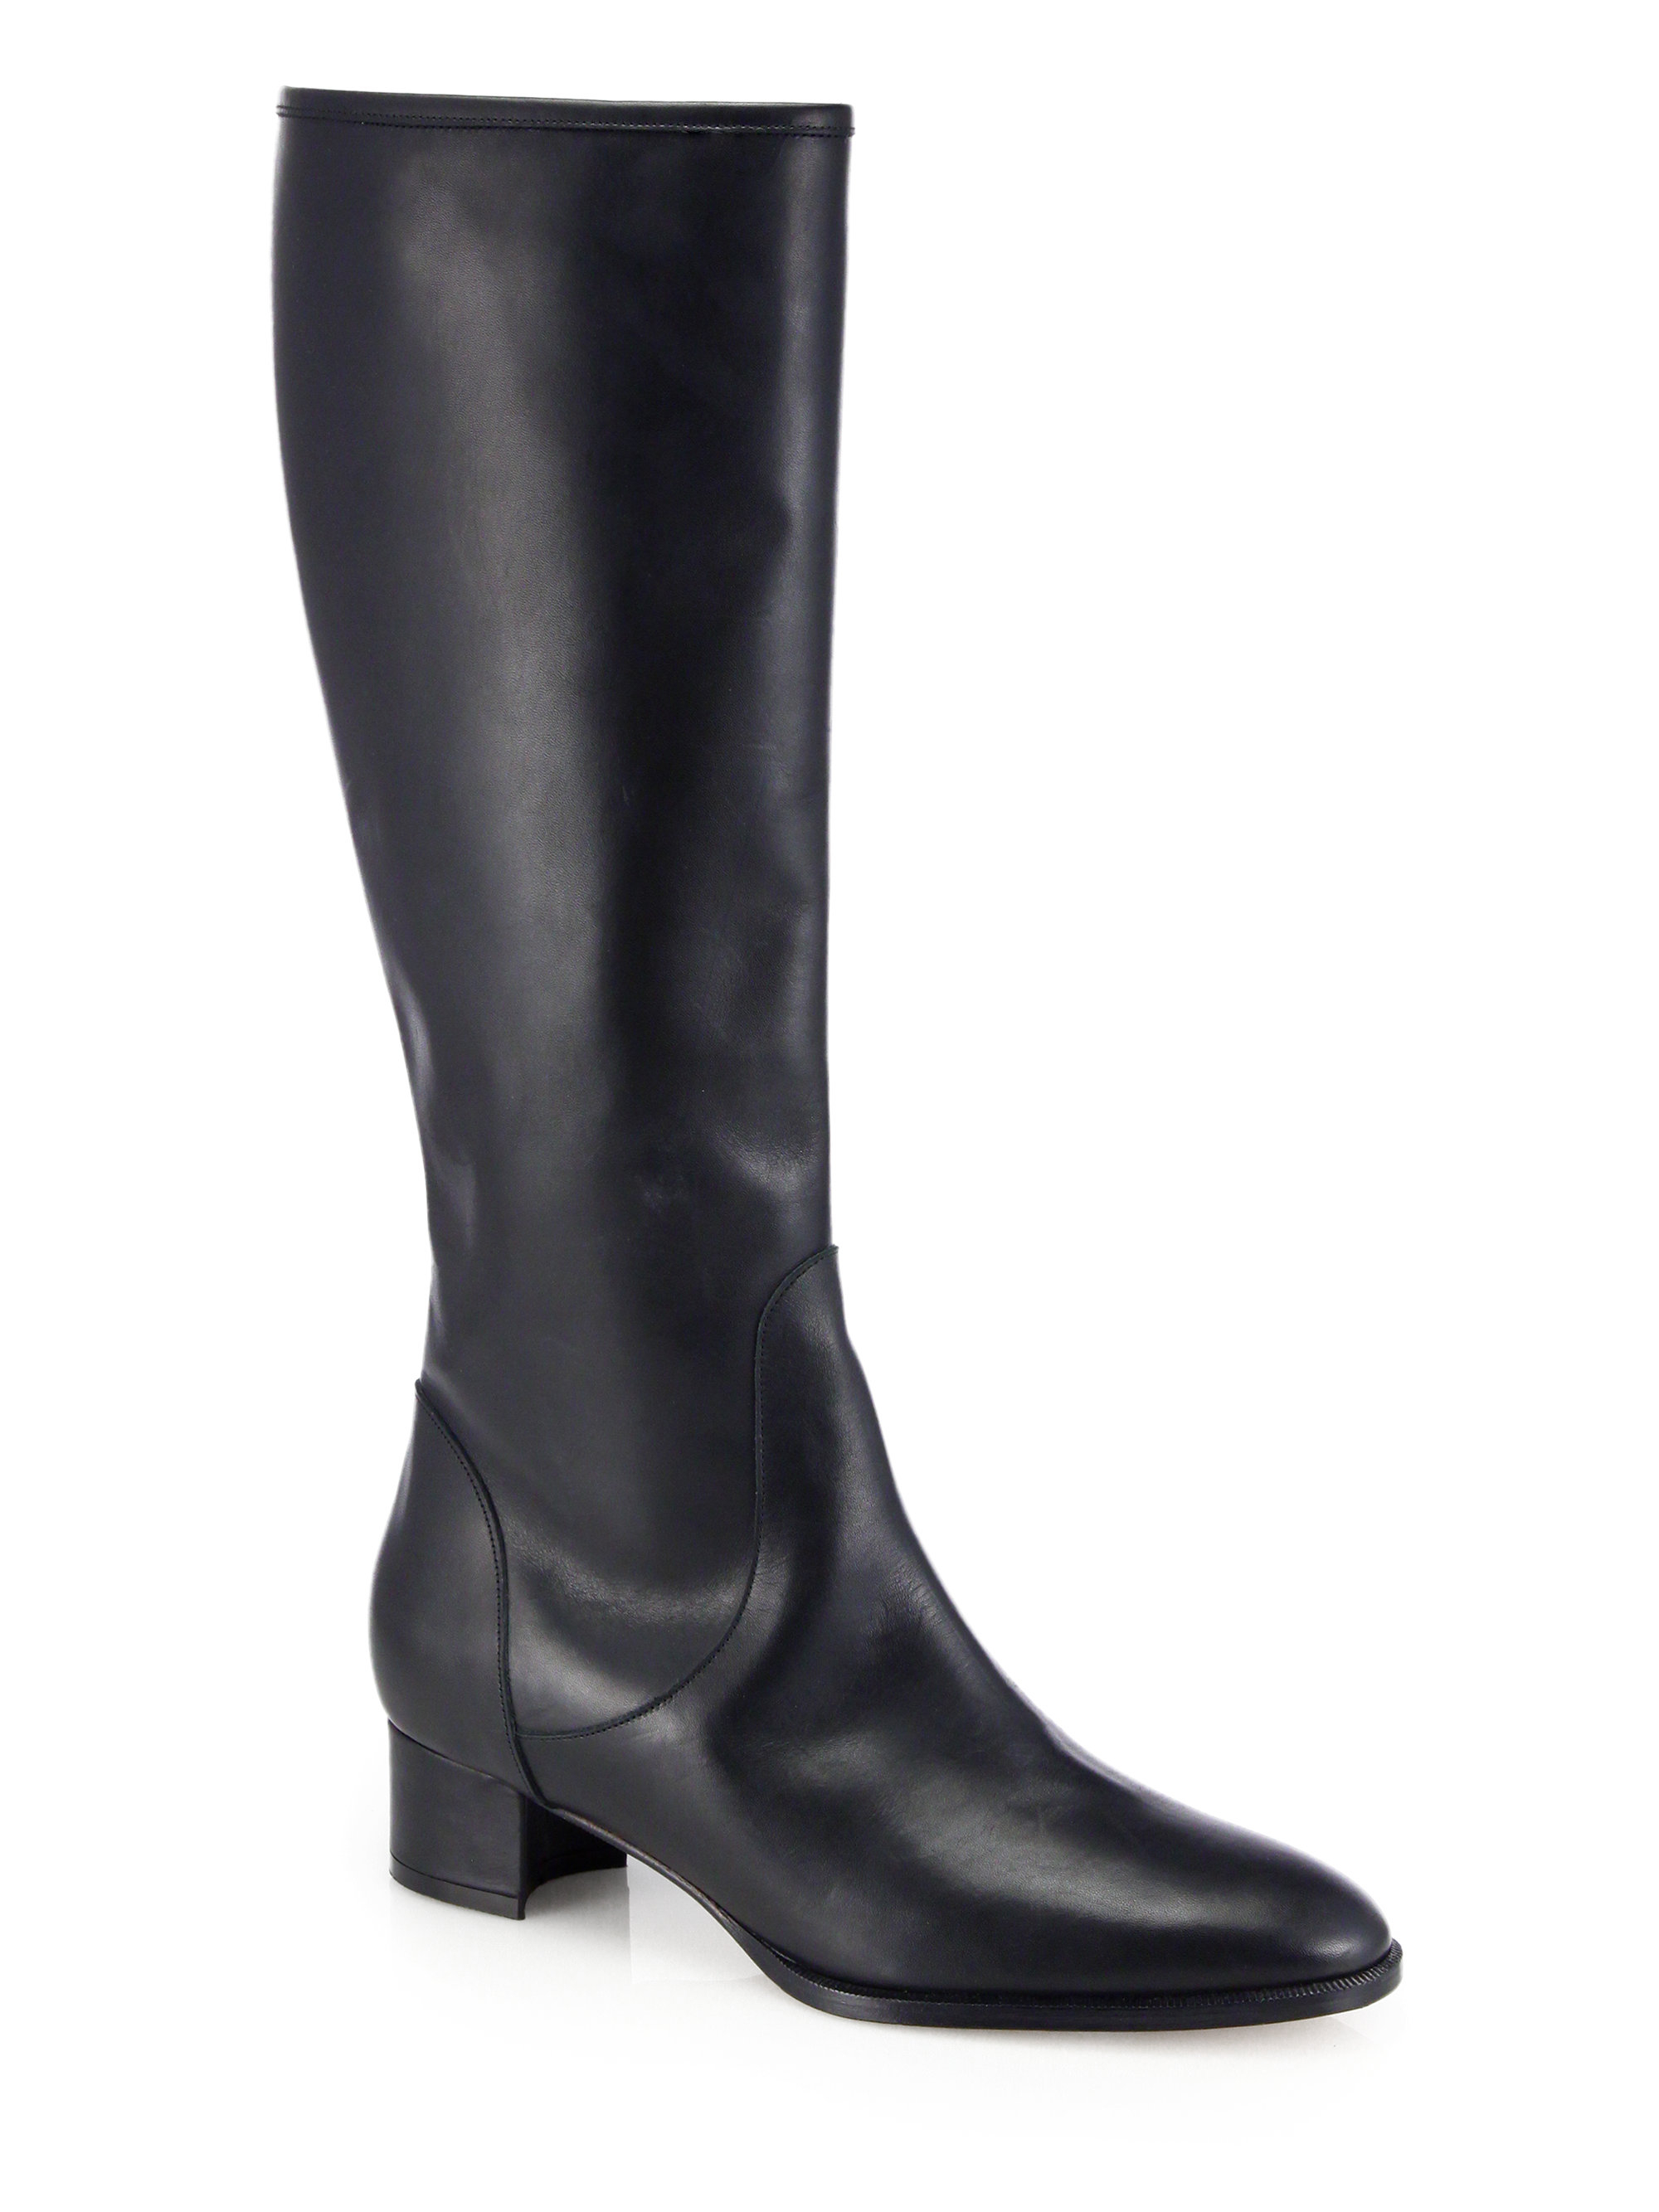 Manolo Blahnik Hanzuofla Leather Knee-High Boots in Black | Lyst